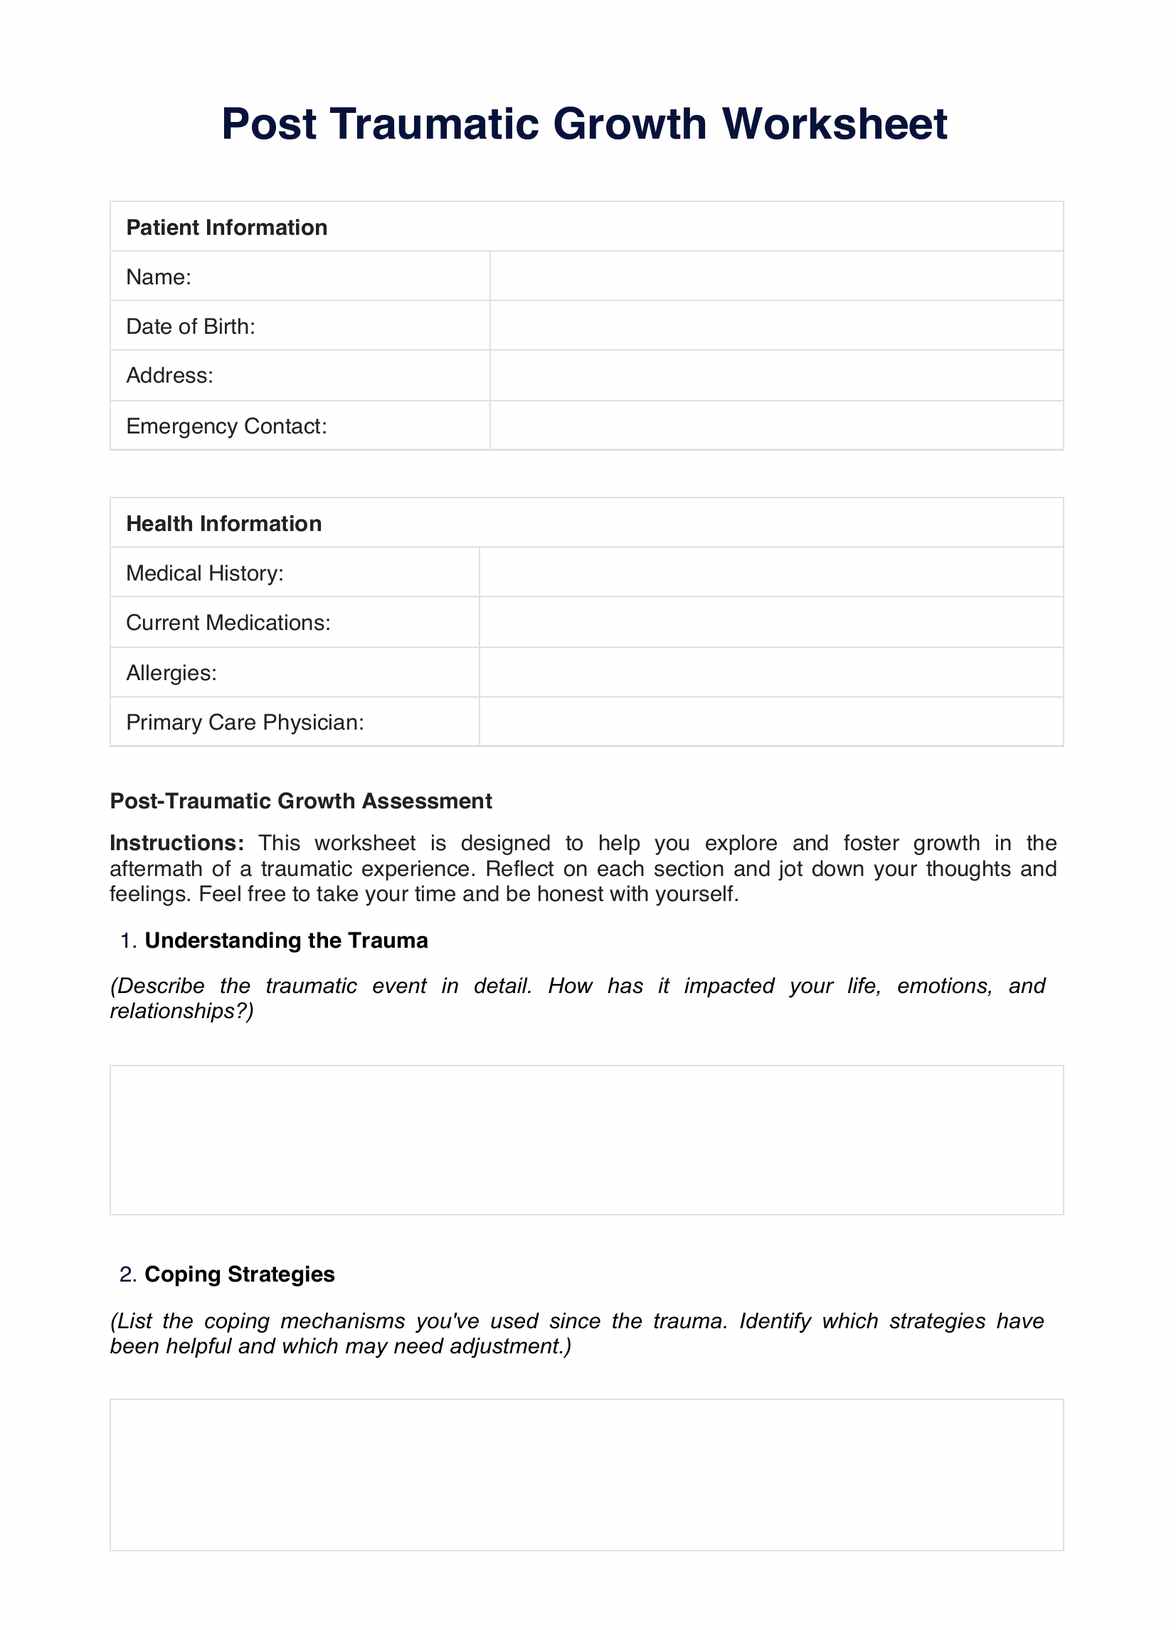 Post Traumatic Growth Worksheet PDF Example